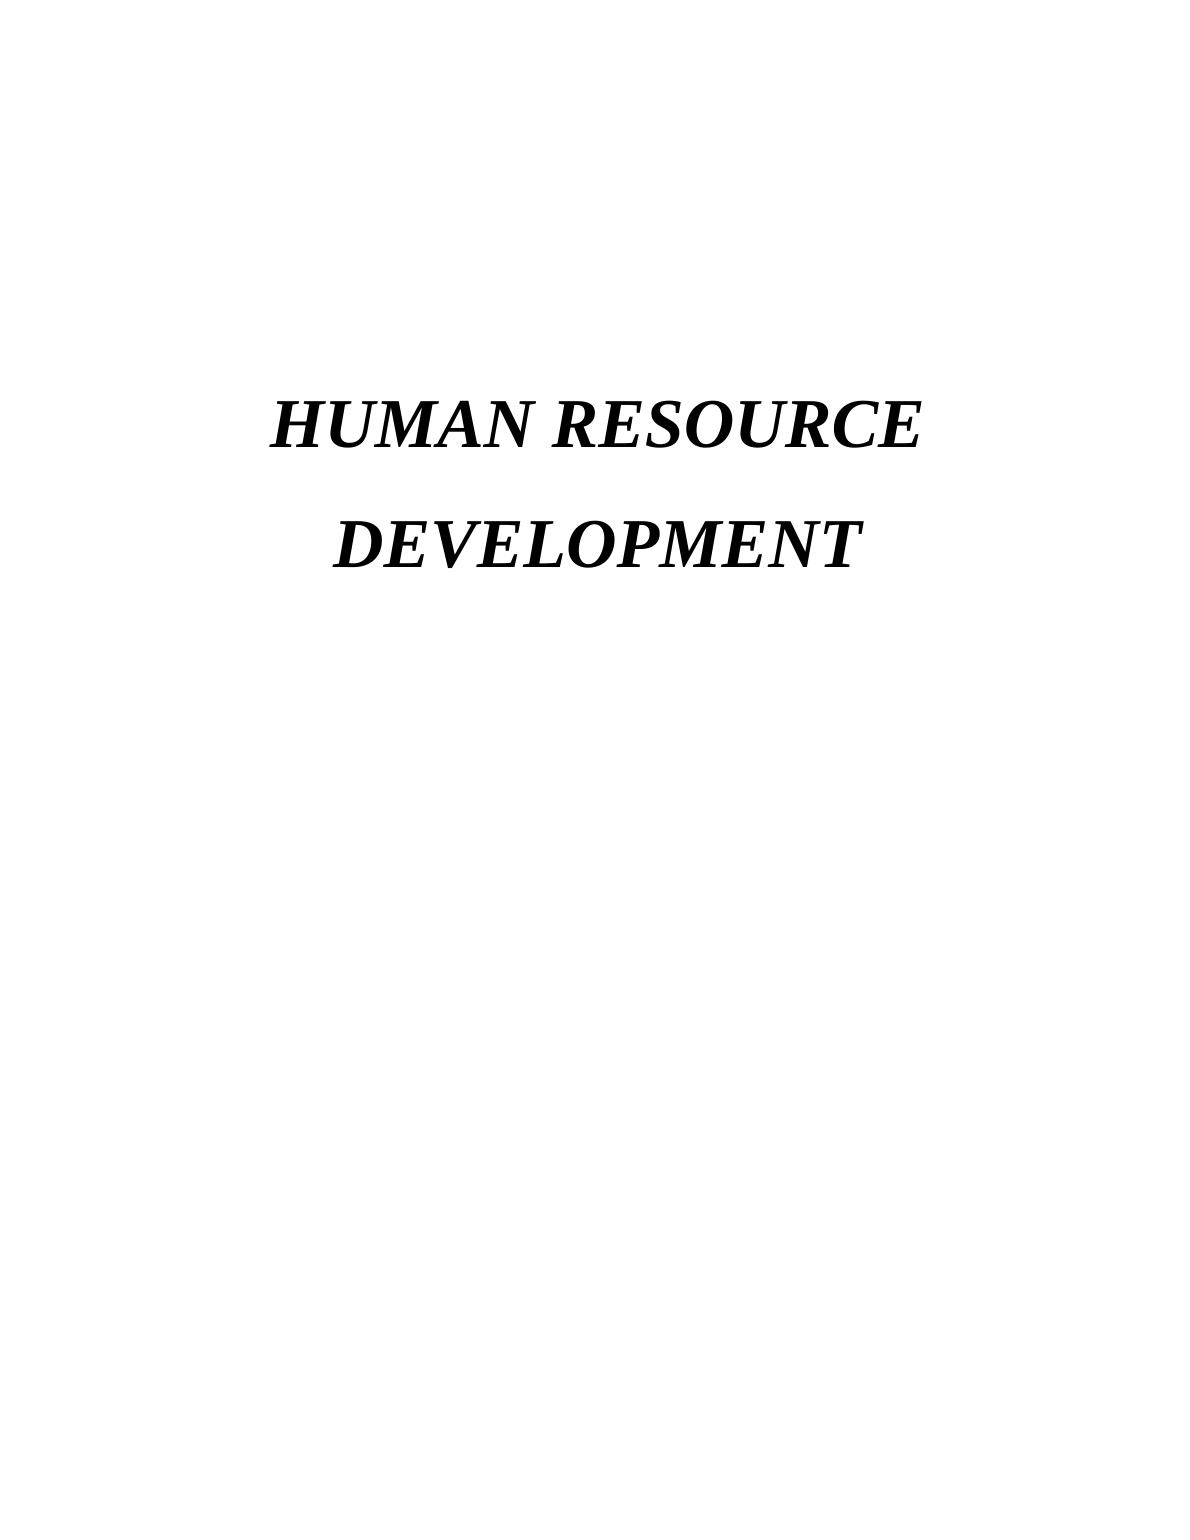 Human Resource Development- Doc_1